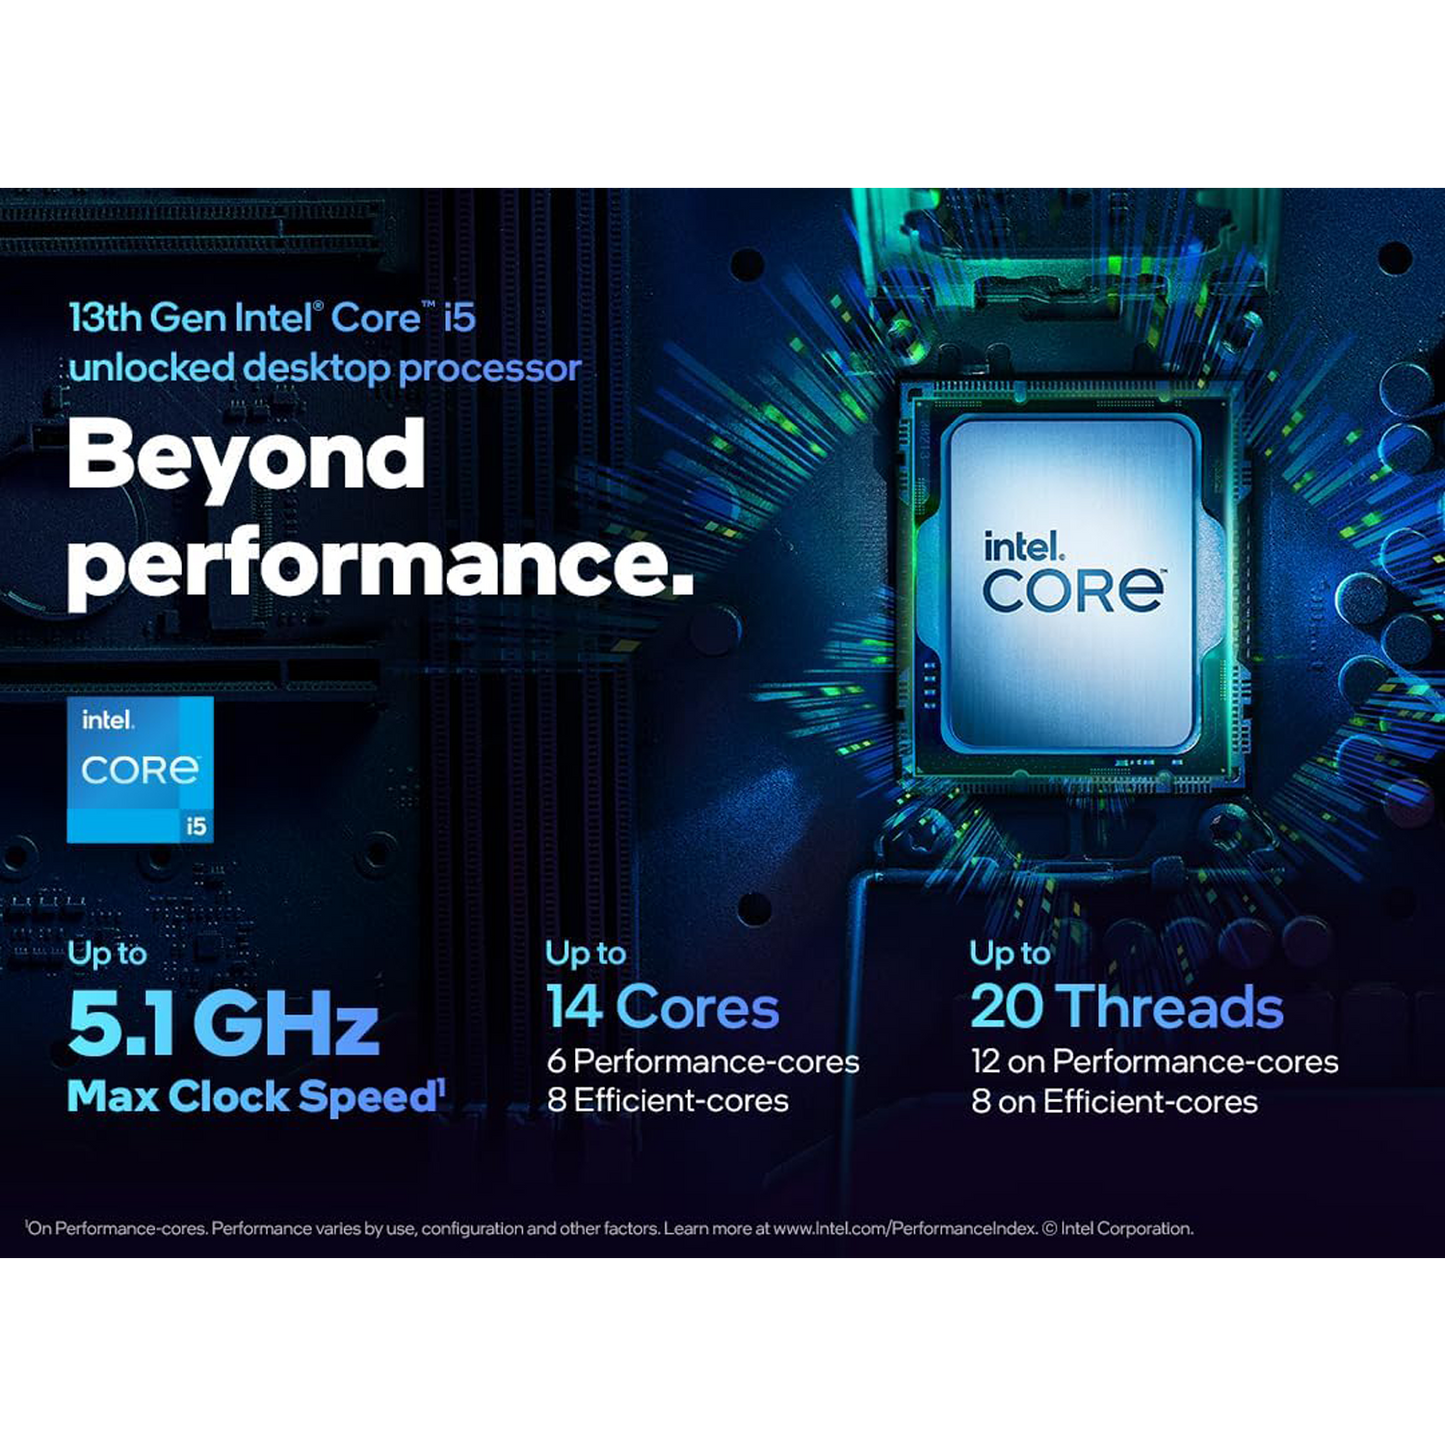 Intel Core i5-13600k